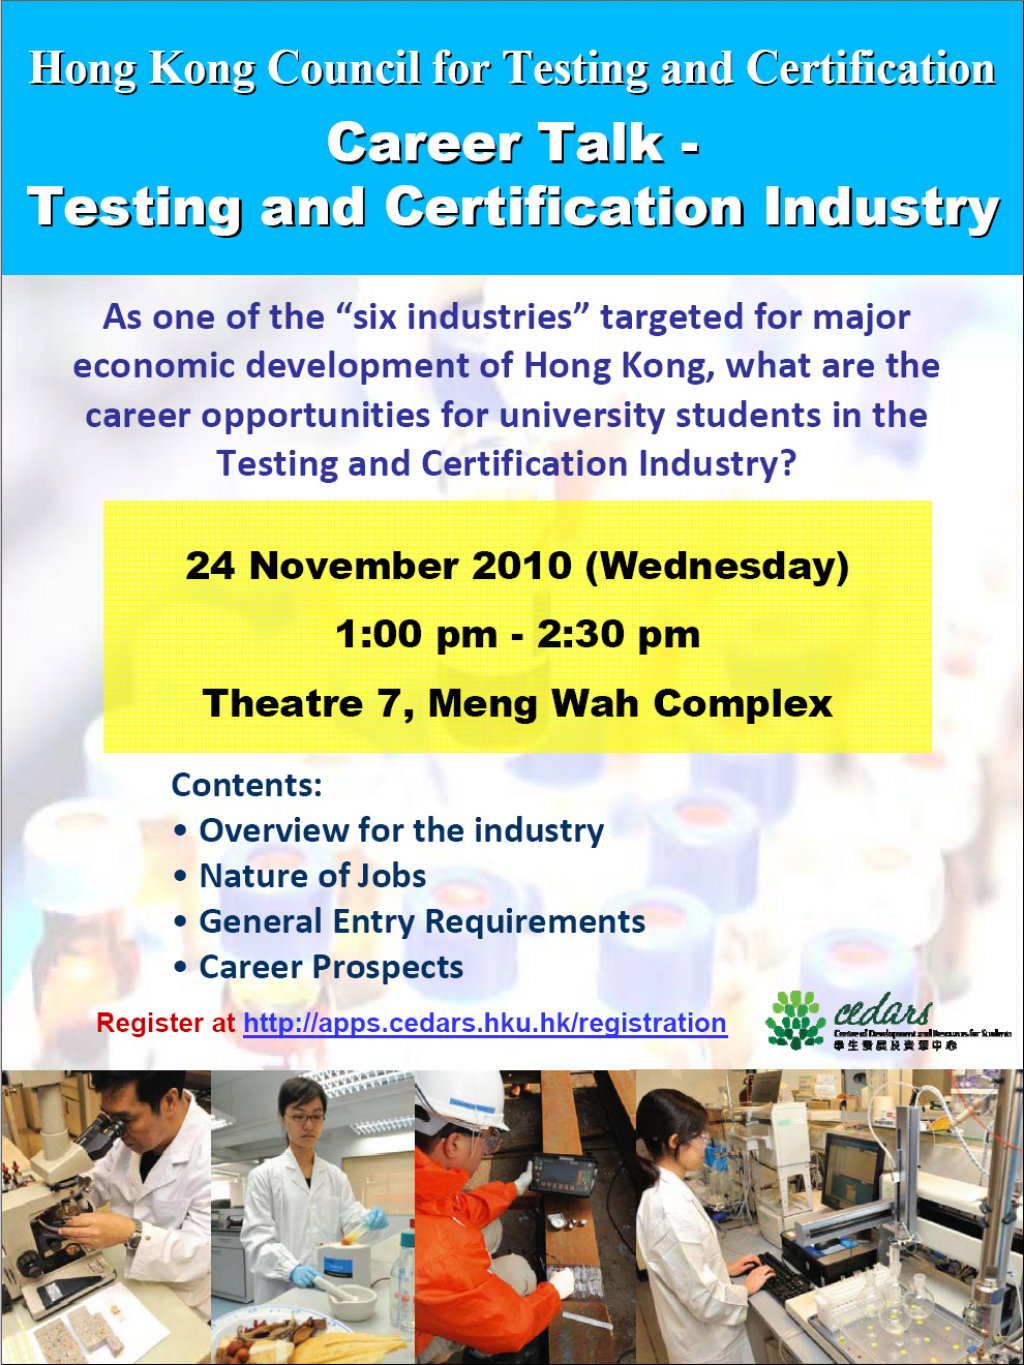 Career Talk - Testing and Certification Industry on 24 Nov